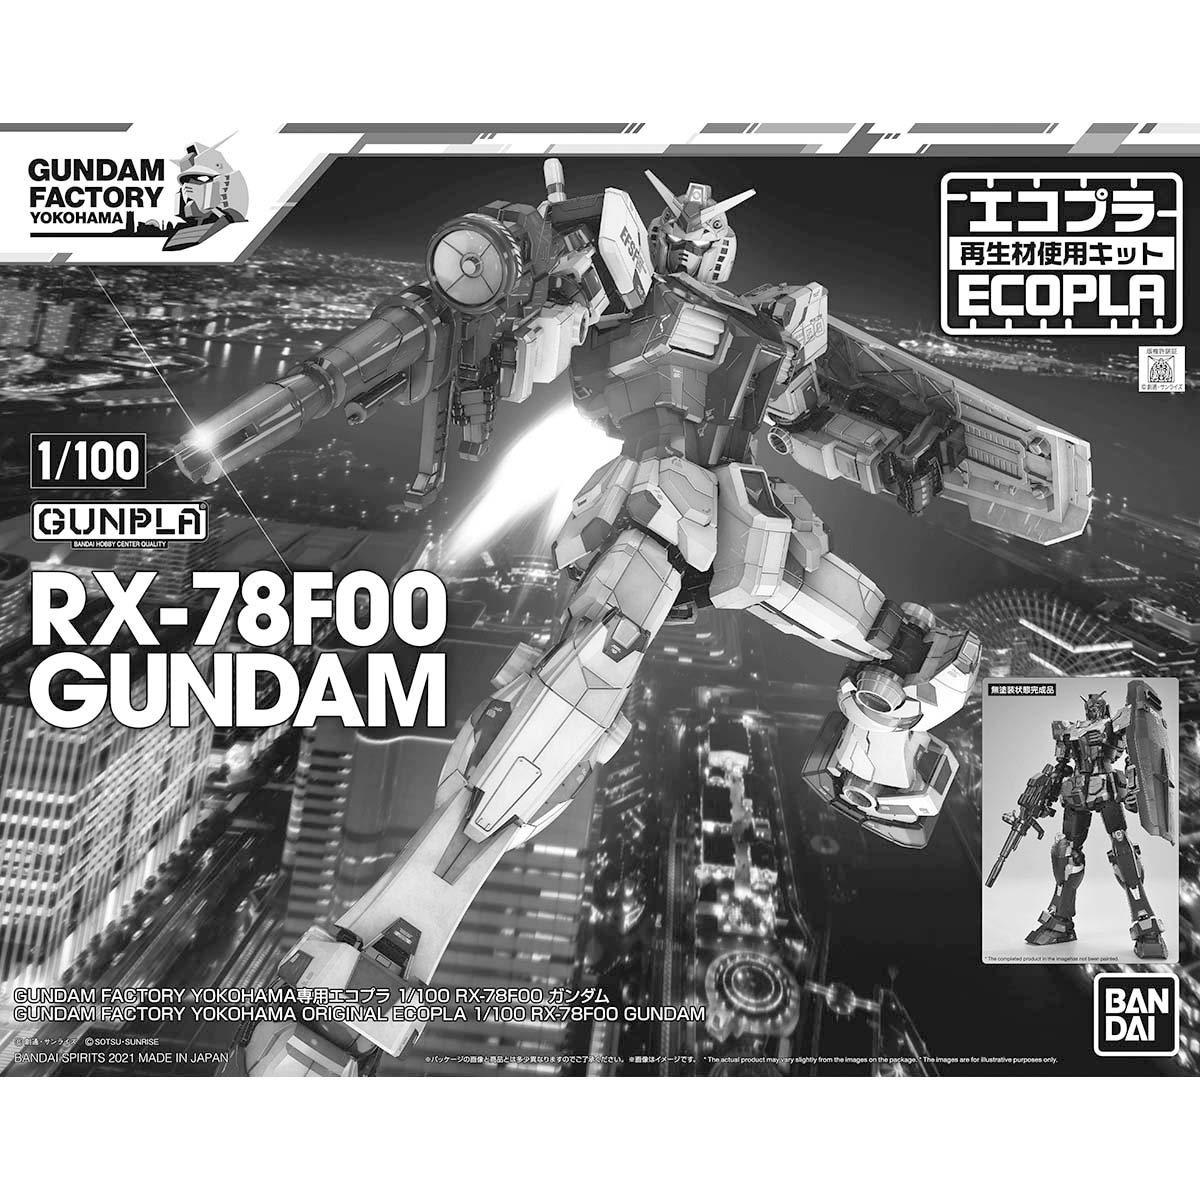 GUNDAM FACTORY YOKOHAMA専用エコプラ 1/100 RX-78F00 ガンダム 03